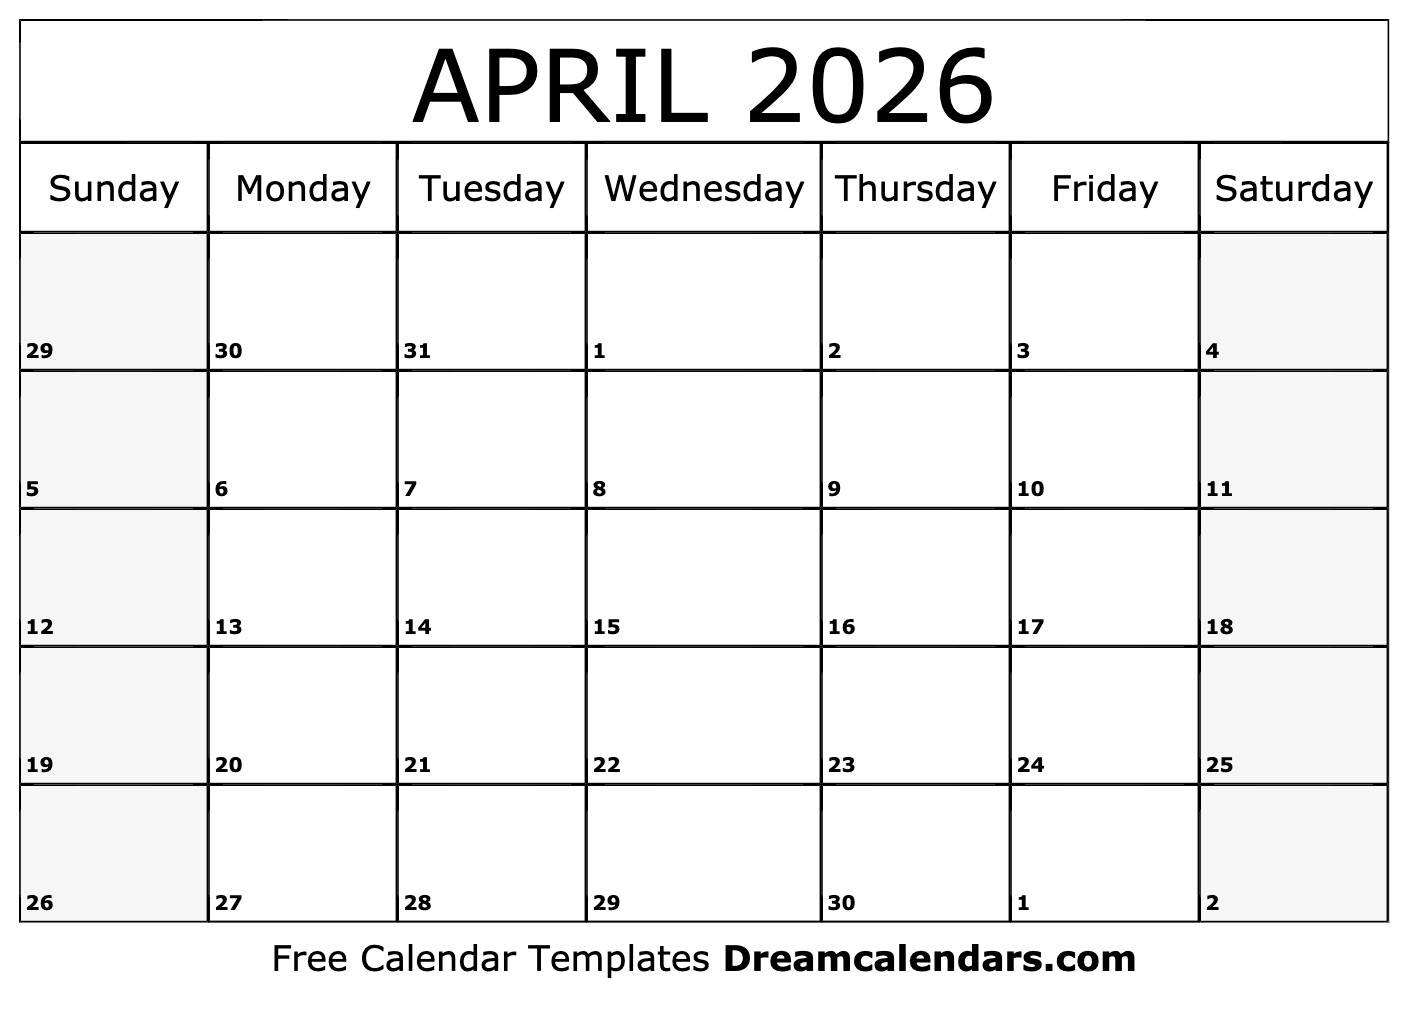 april-2026-calendar-free-blank-printable-with-holidays